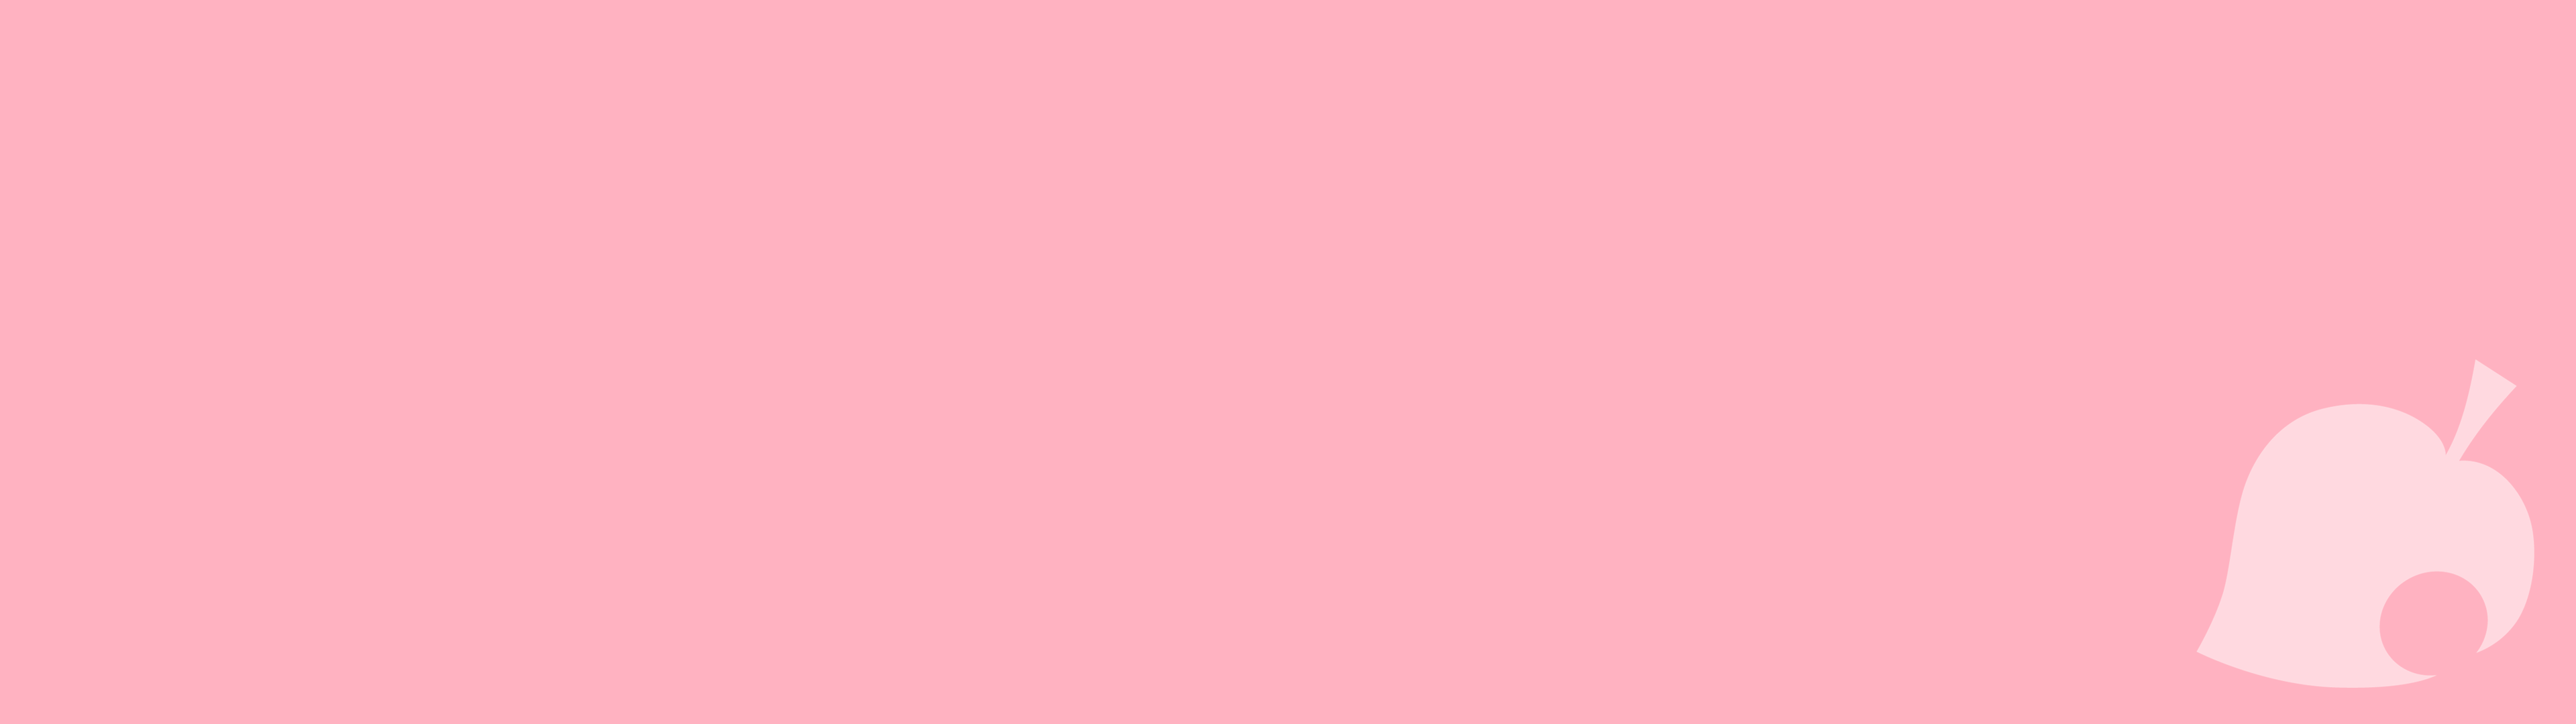 General 3840x1080 Animal Crossing New Leaf Animal Crossing logo minimalism pink light pink dual monitors